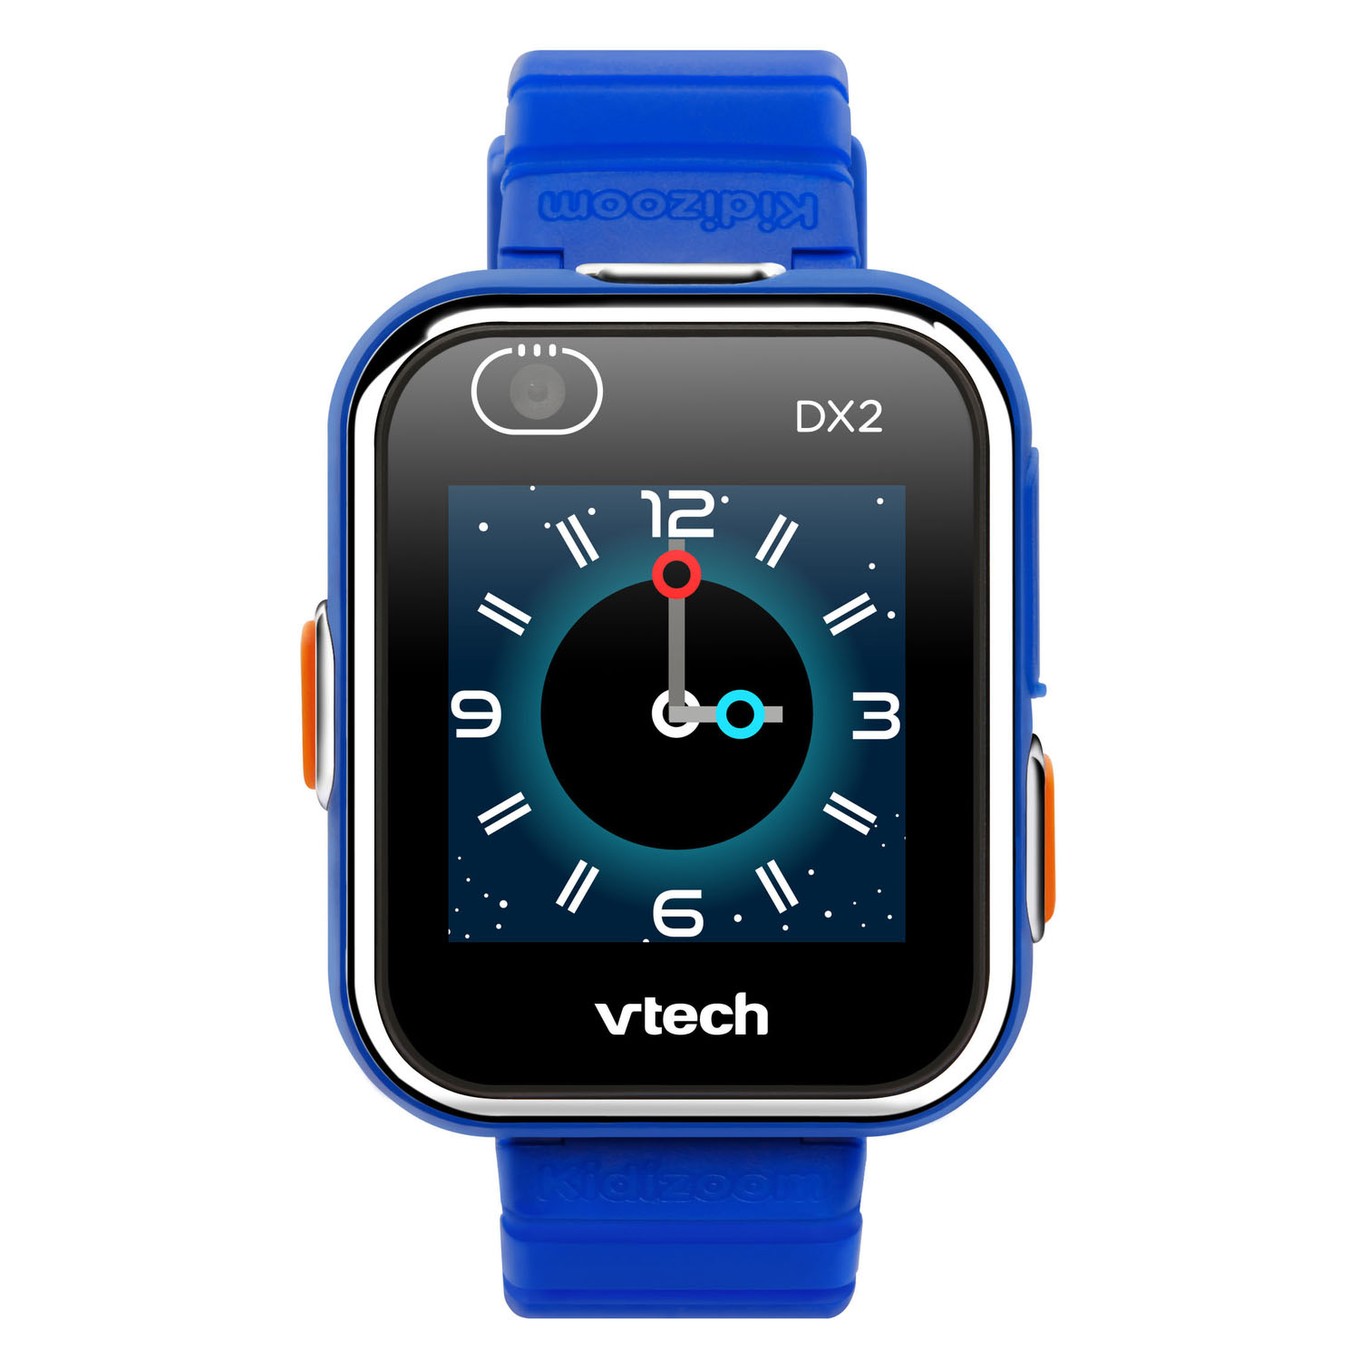 vtech kidizoom smartwatch dx2 bands